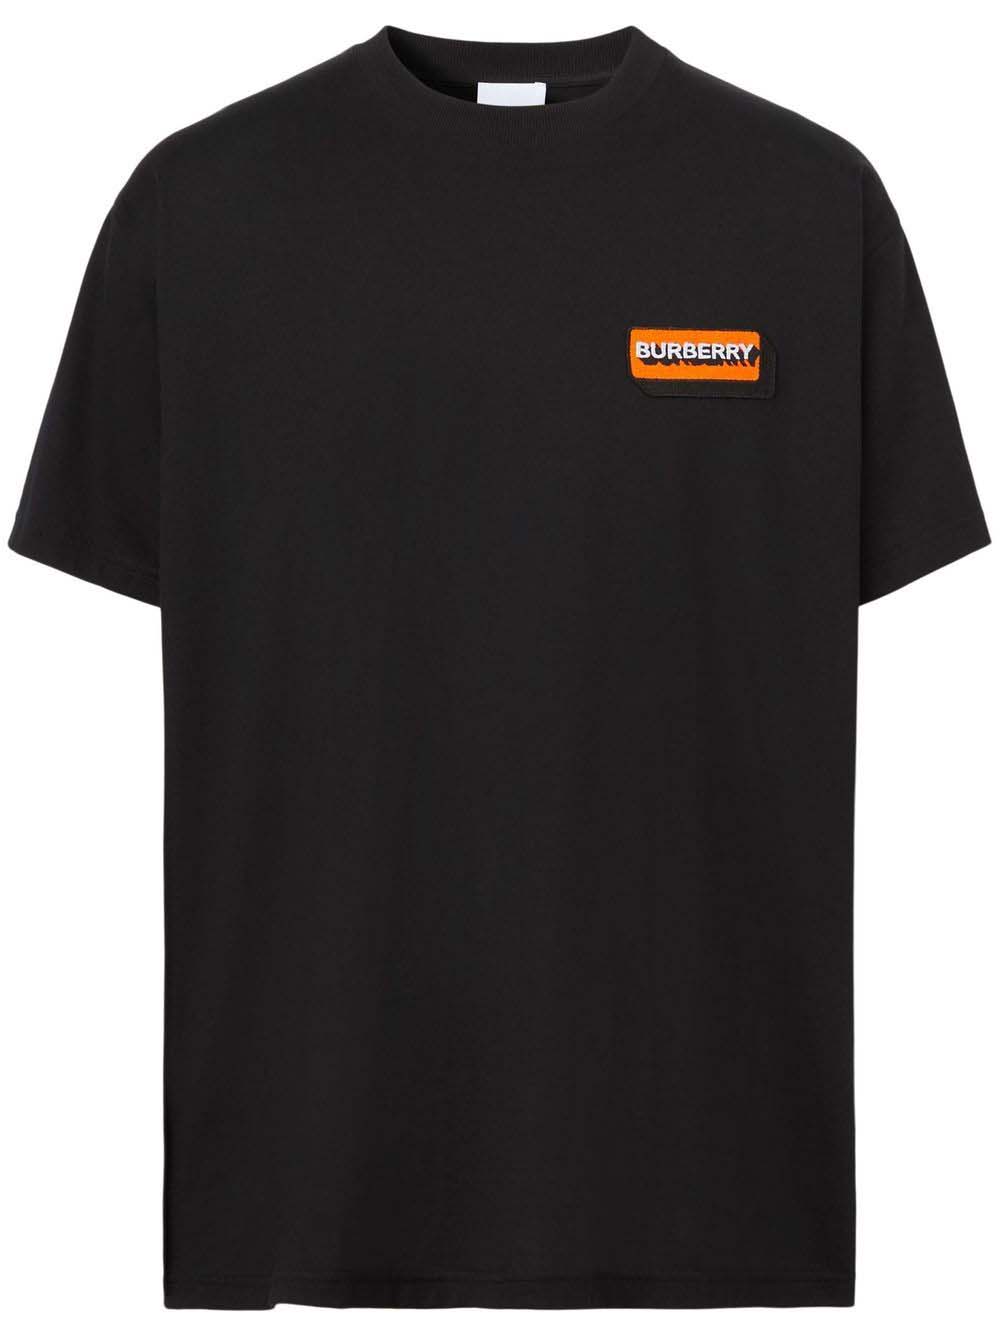 Burberry Men's Black Chain Detail T-shirt, Size X-Small - Walmart.com